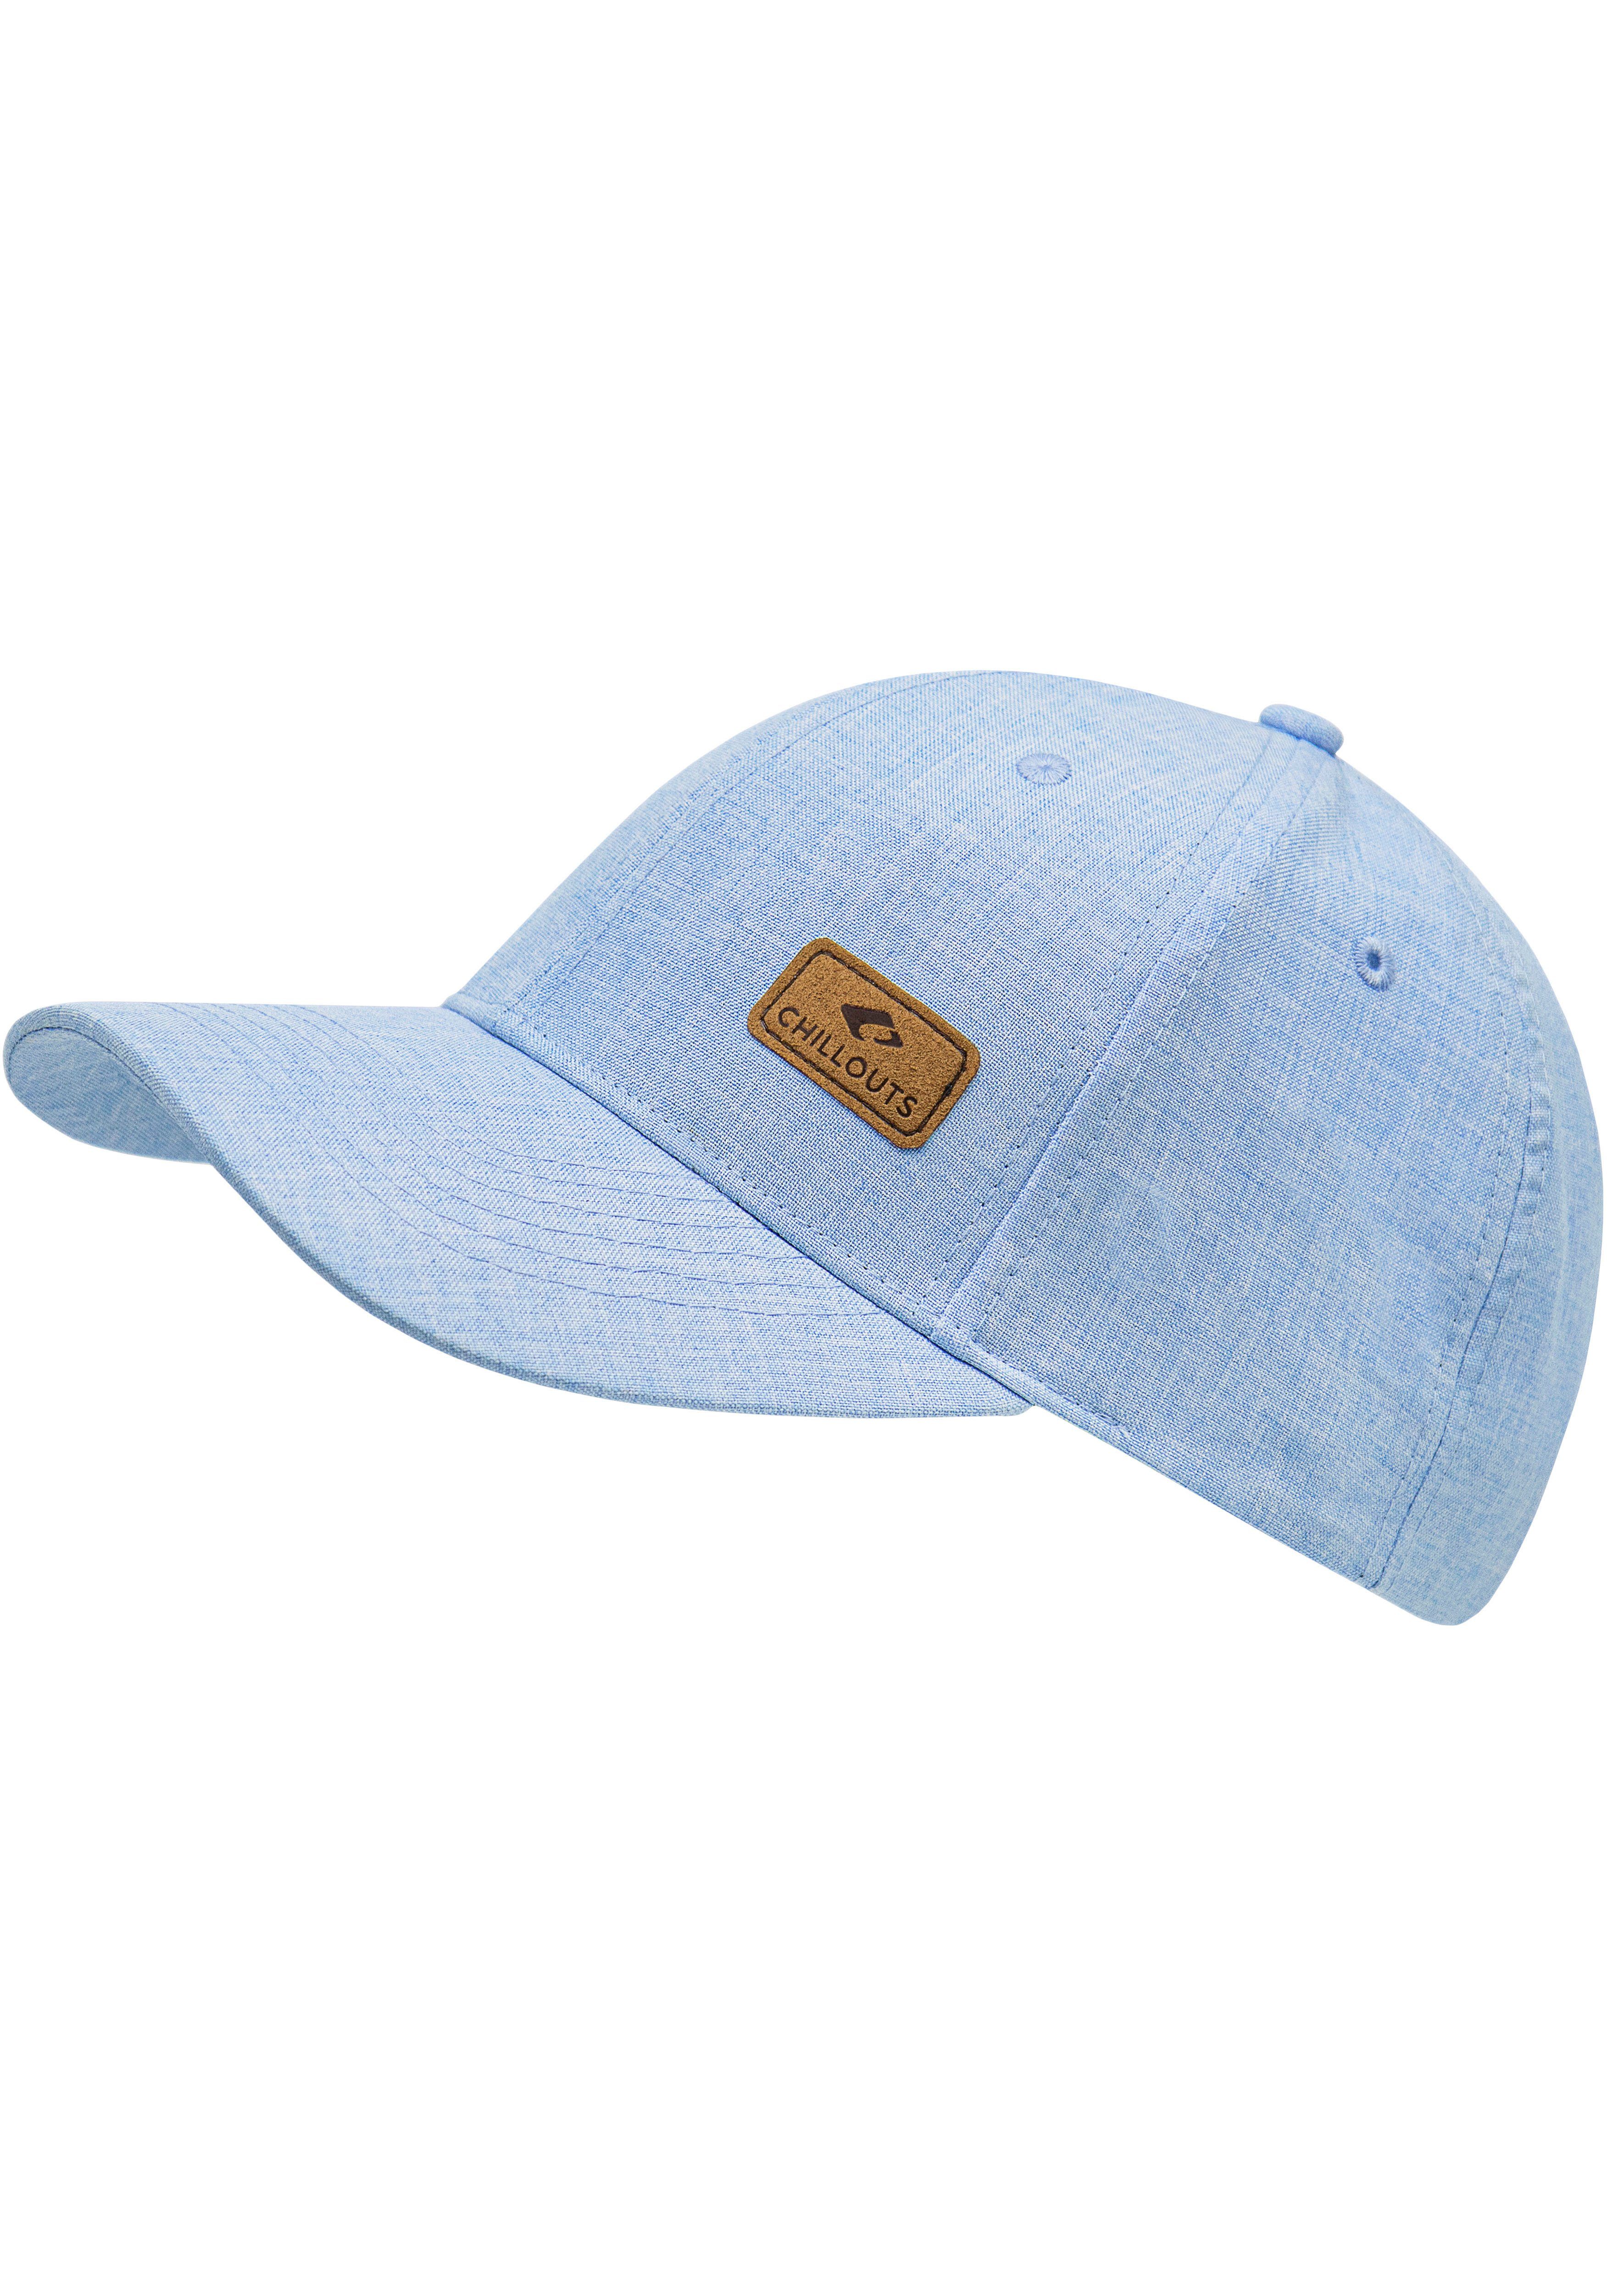 chillouts Baseball Cap Amadora Hat in melierter Optik, One Size, verstellbar,  Individuell verstellbar - Größenverstellbar